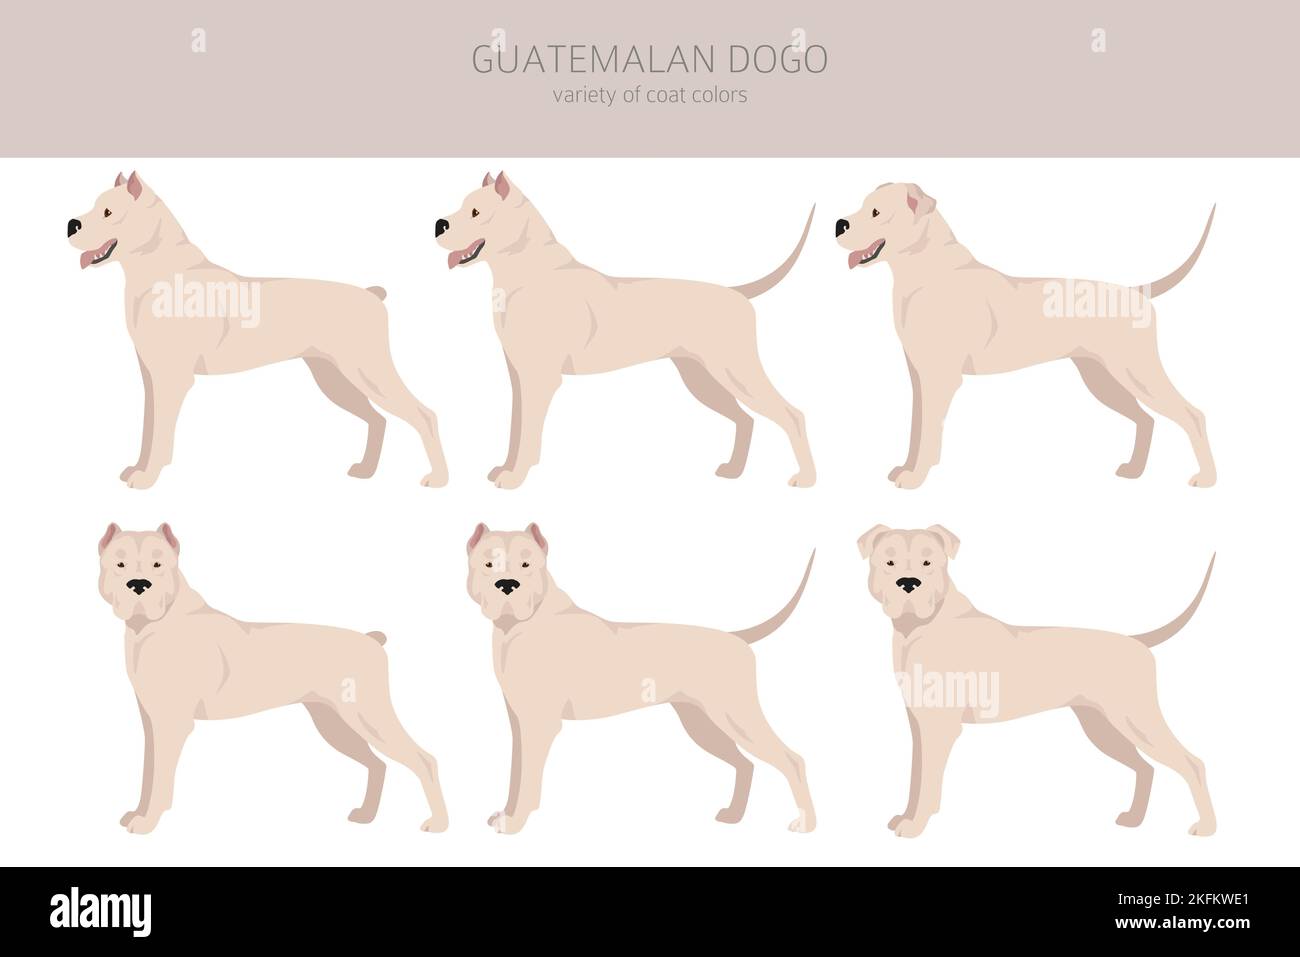 Guatemalan dogo clipart. Different coat colors set.  Vector illustration Stock Vector